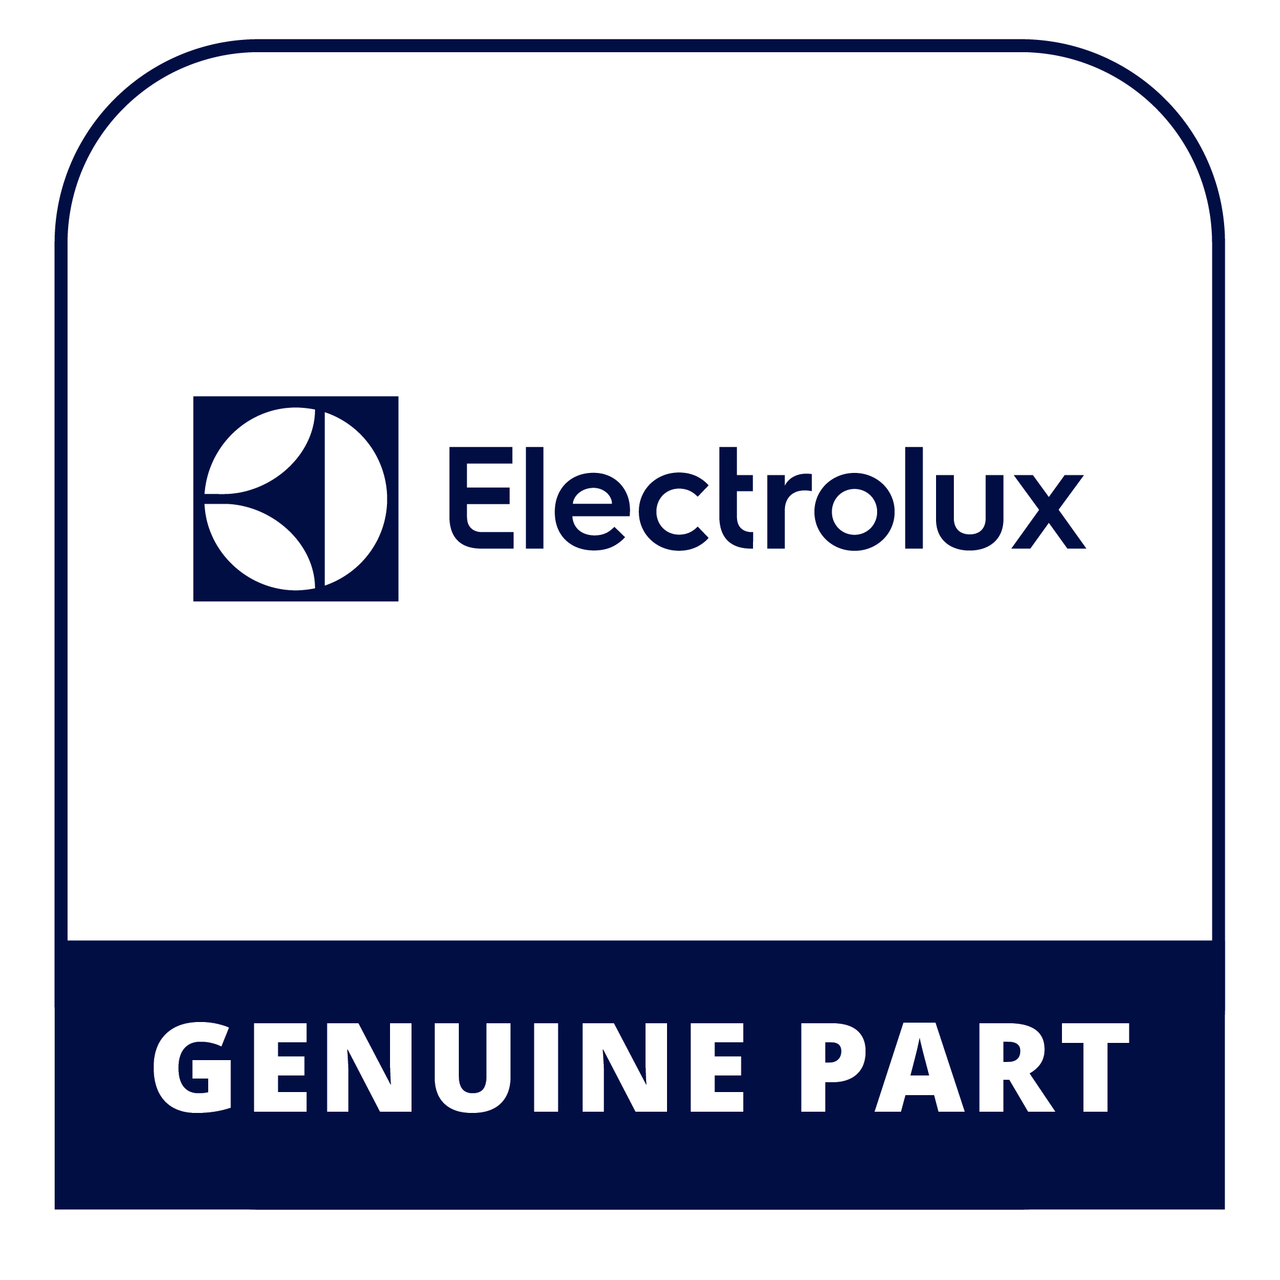 Frigidaire - Electrolux 316465603 Grate Set - Genuine Electrolux Part